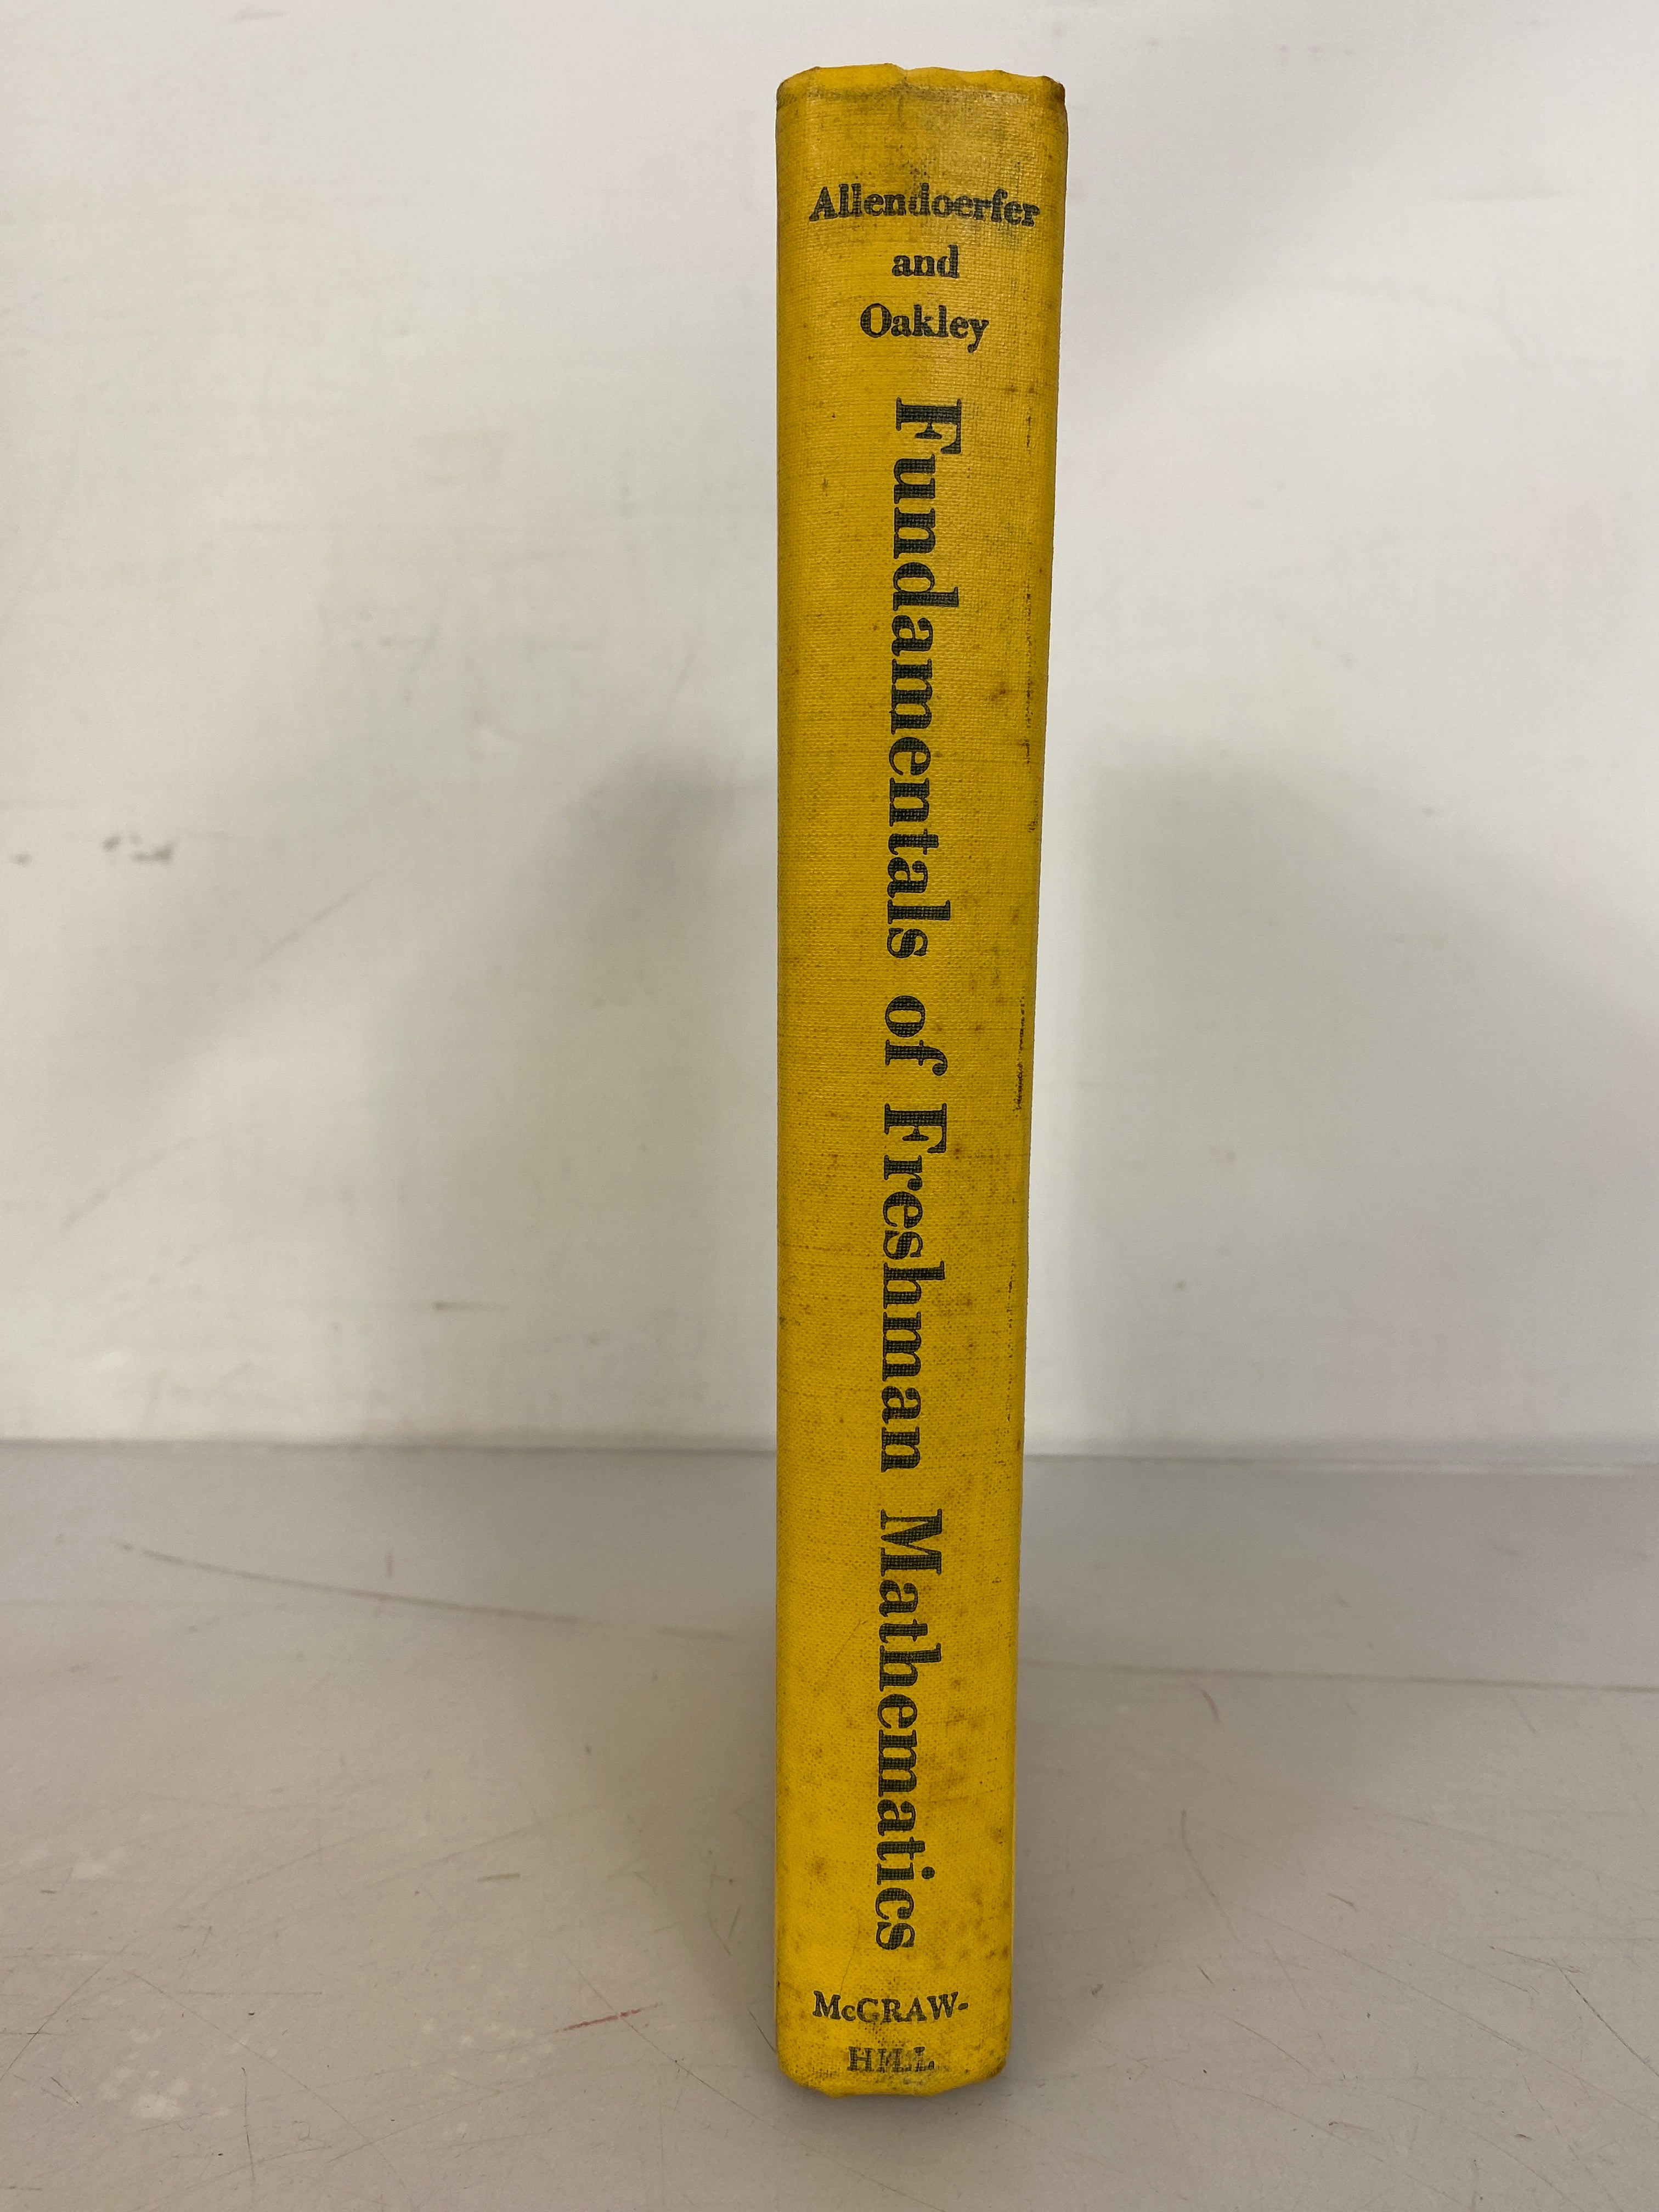 Lot of 2 Mathematics Fundamentals Textbooks- Algebra and Trigonometry and Freshman Mathematics 1959, 1971 HC